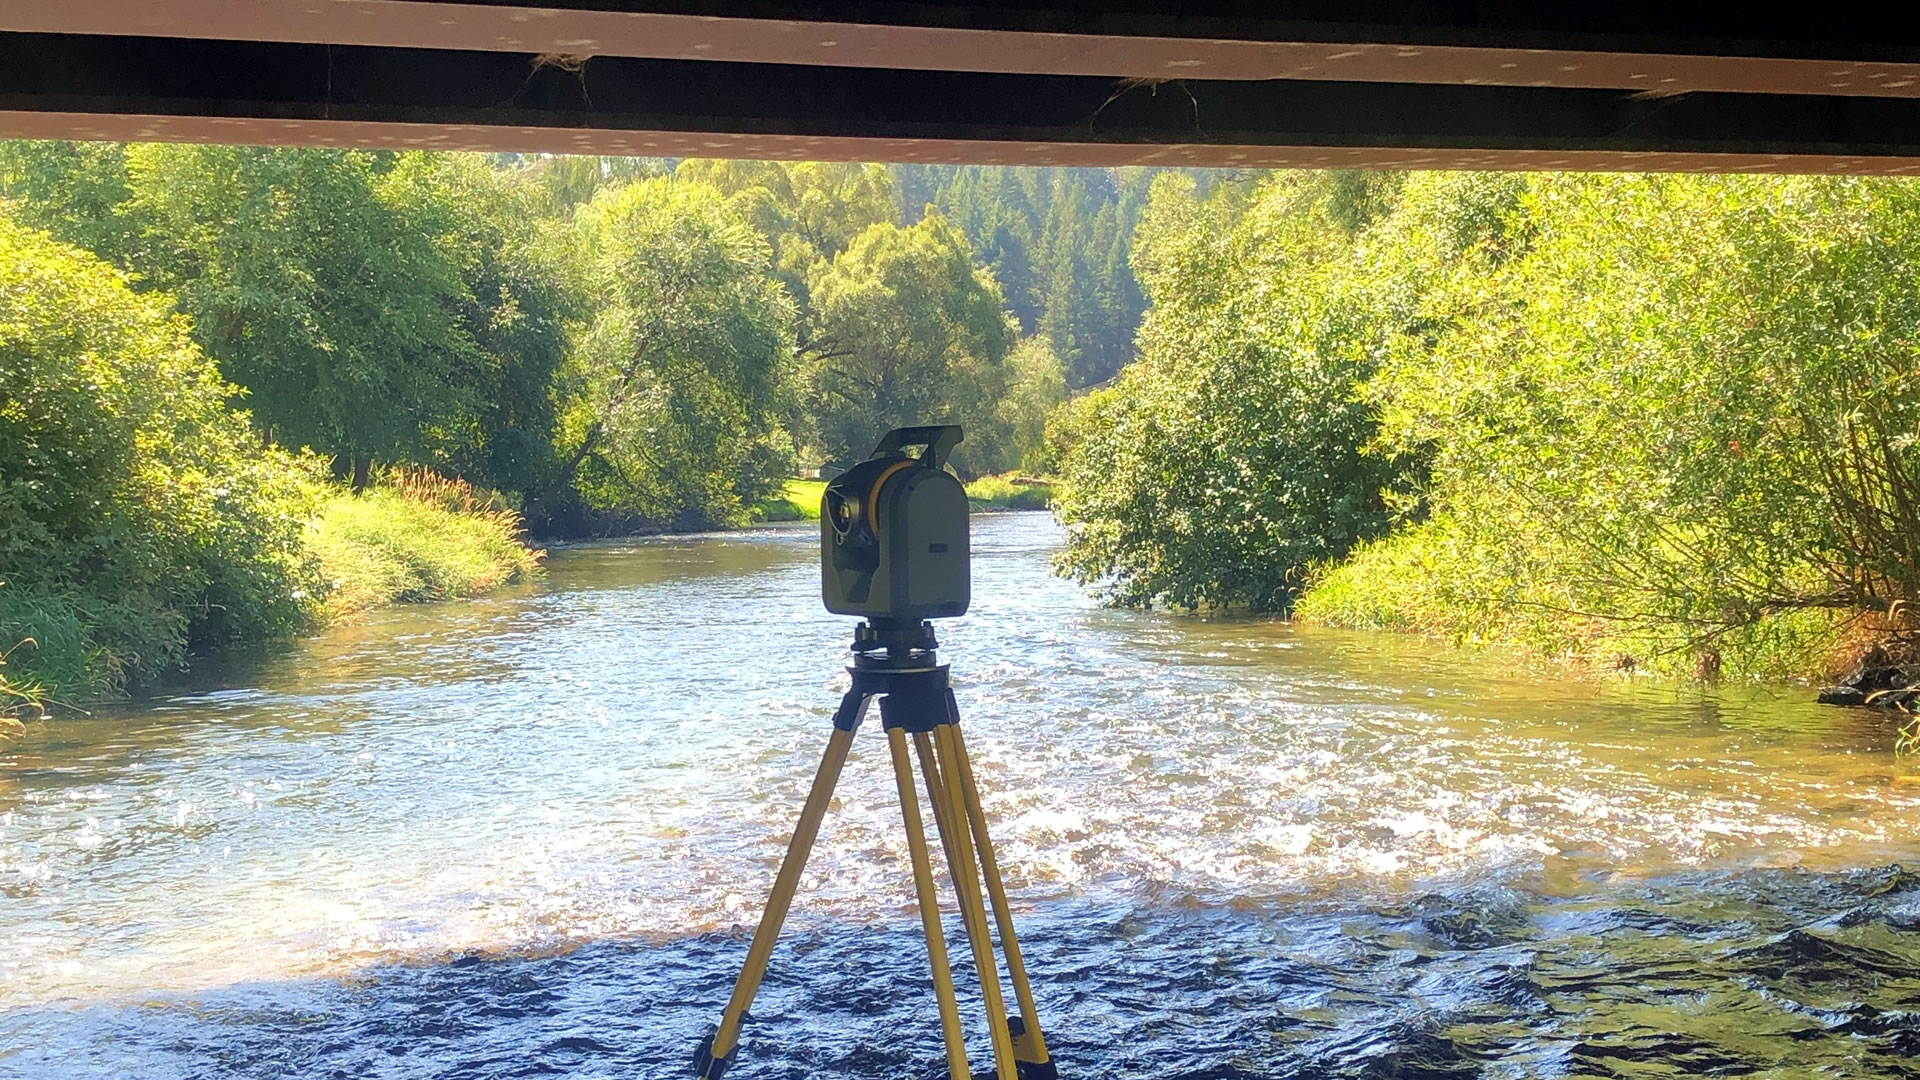 survey theodolite set in a stream under a bridge with scenic background